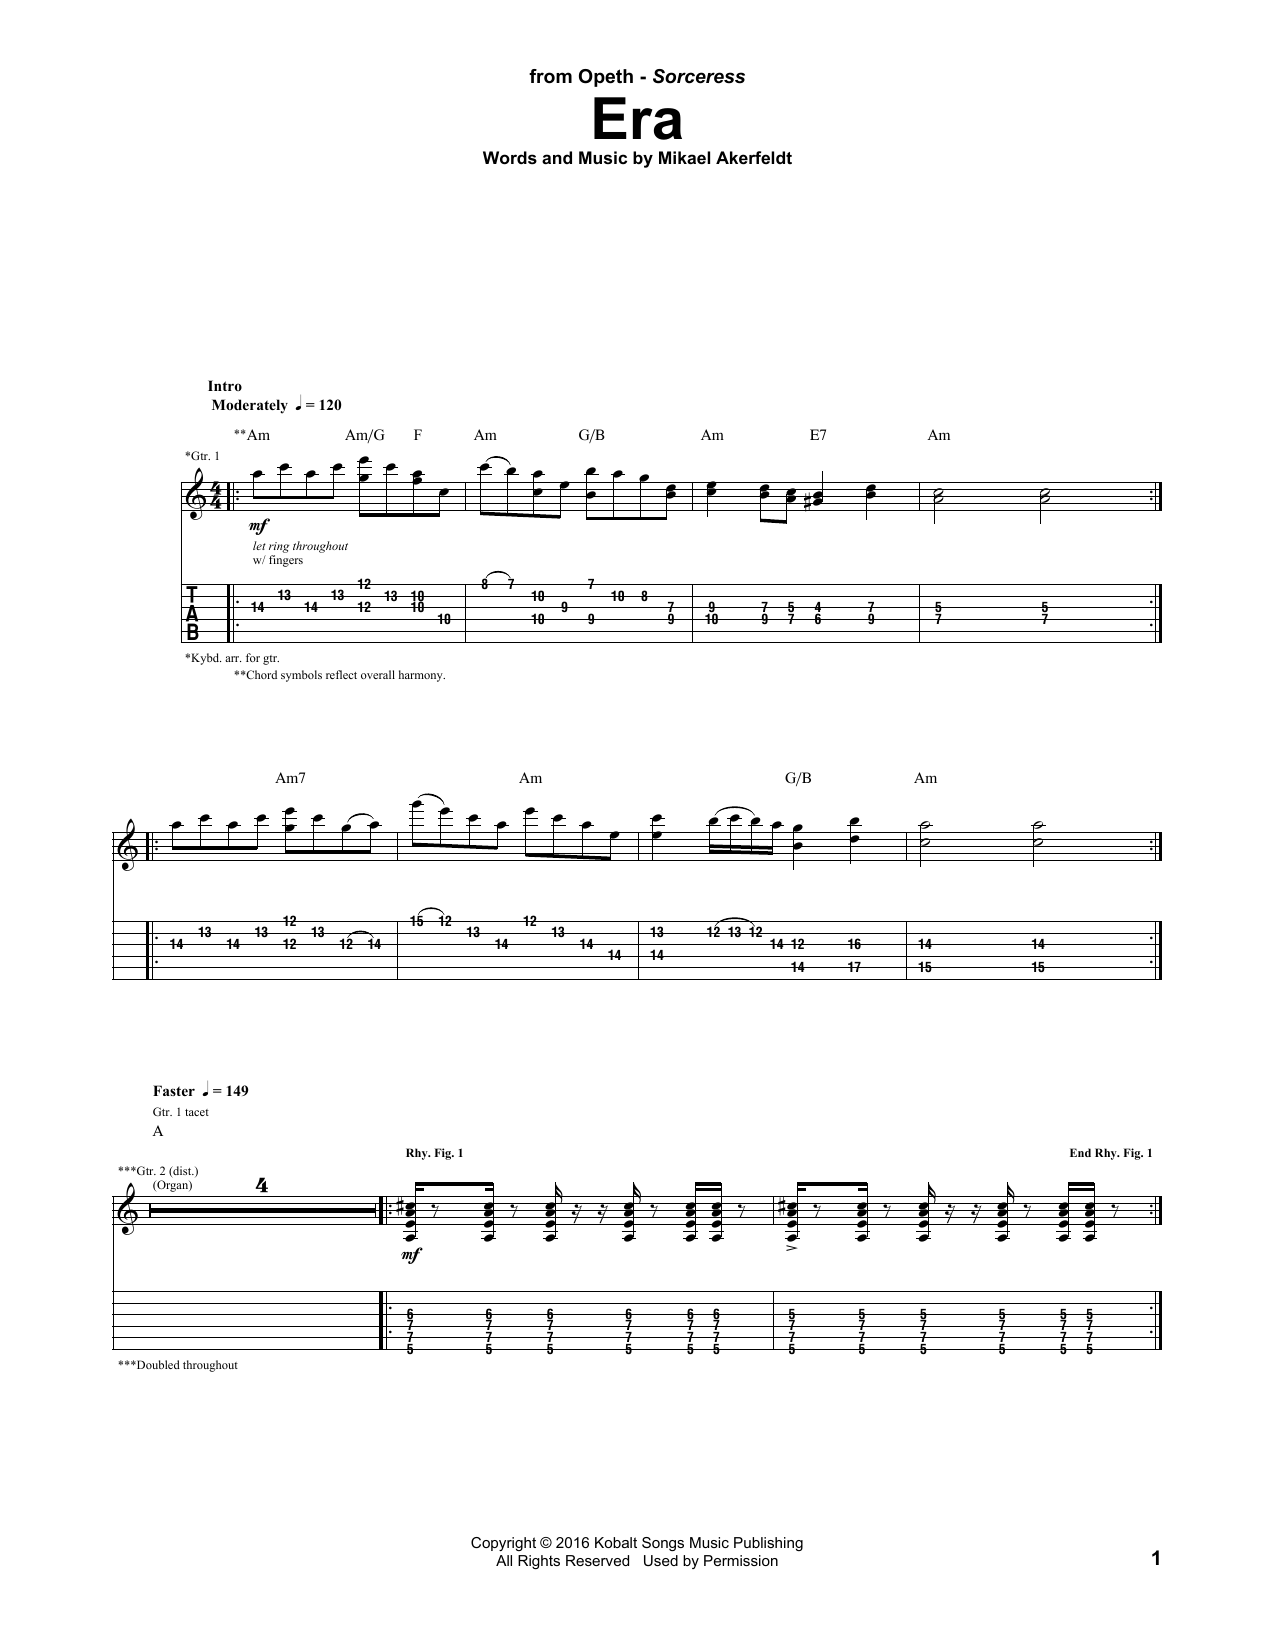 Opeth Era Sheet Music Notes & Chords for Guitar Tab - Download or Print PDF